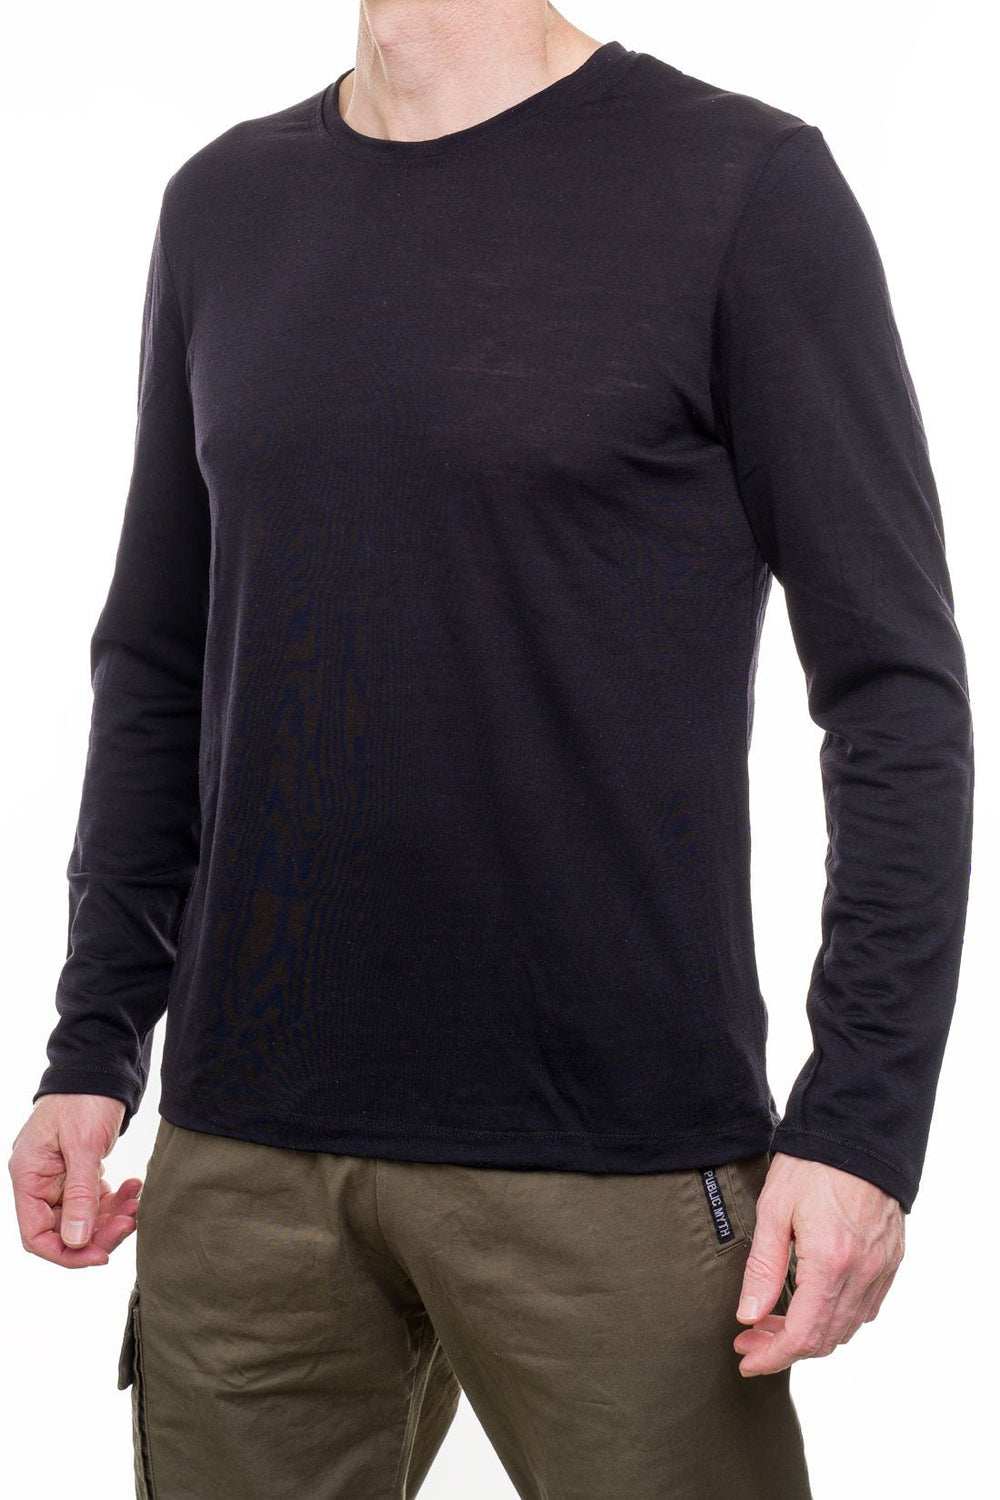 black long sleeve superfine merino wool shirt 